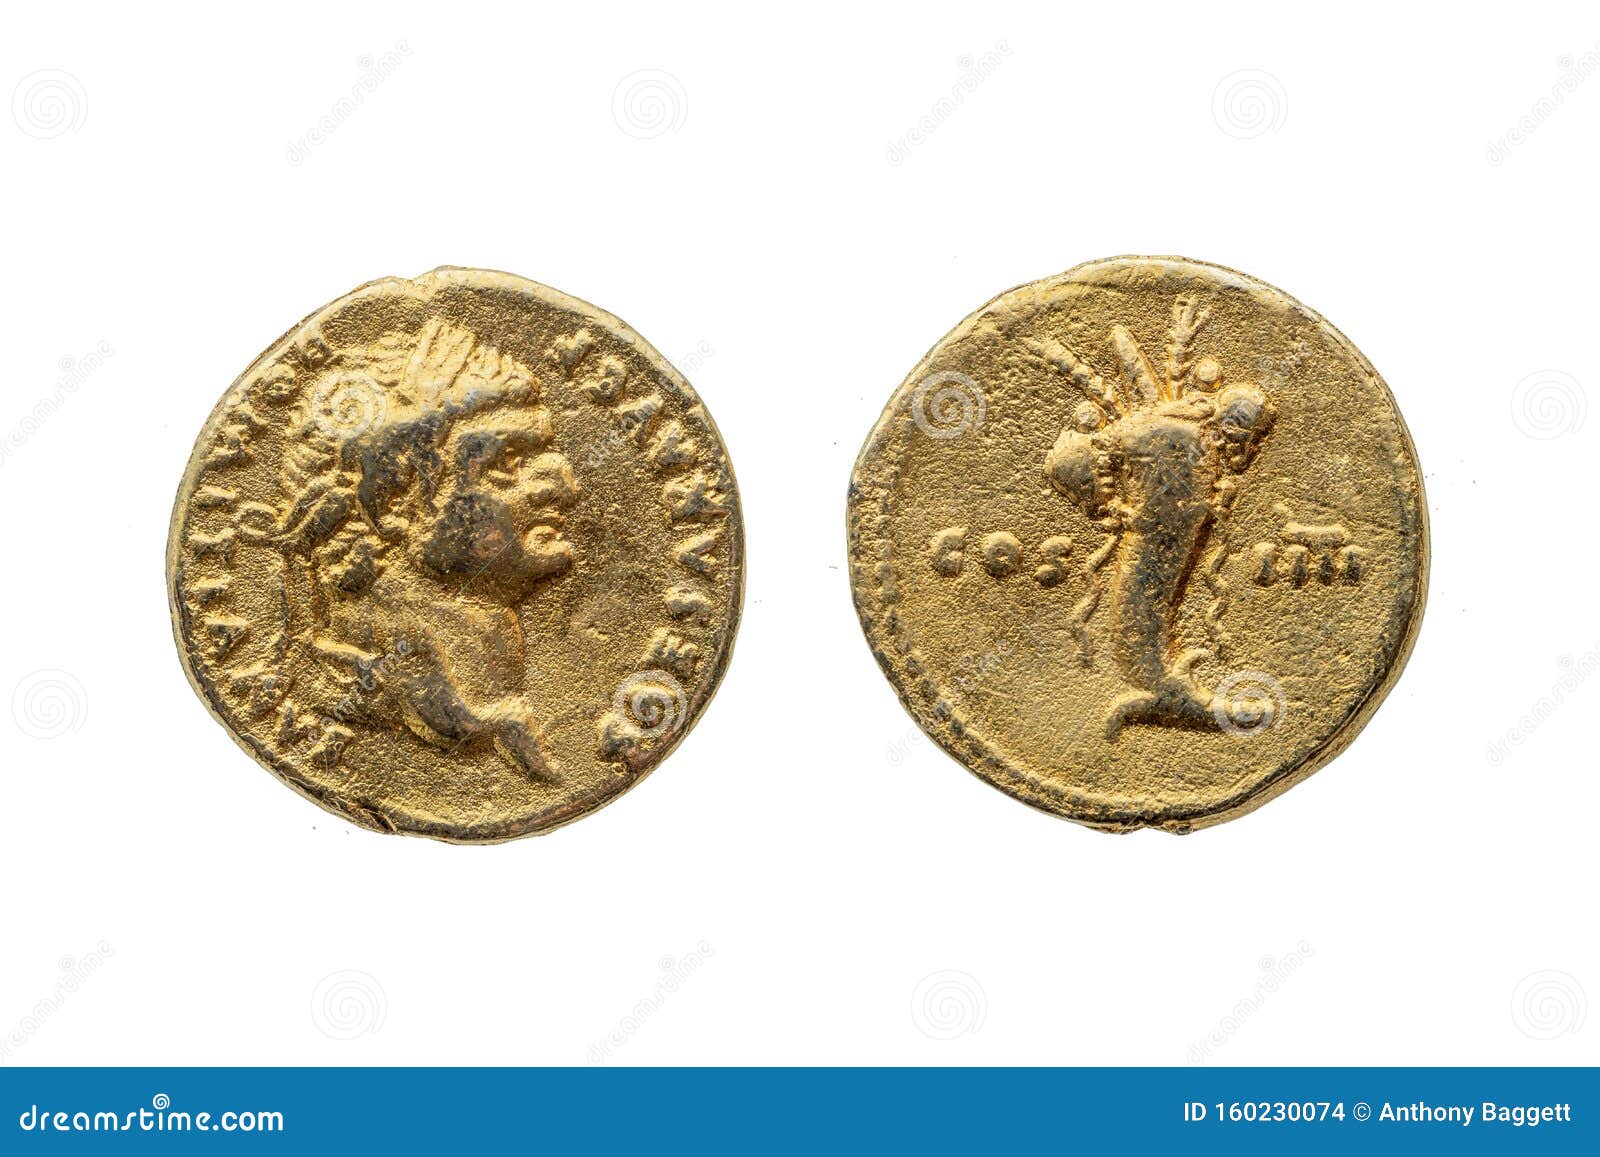 Roman Gold Aureus Coin of Roman Emperor Domitian Stock Photo - Image of